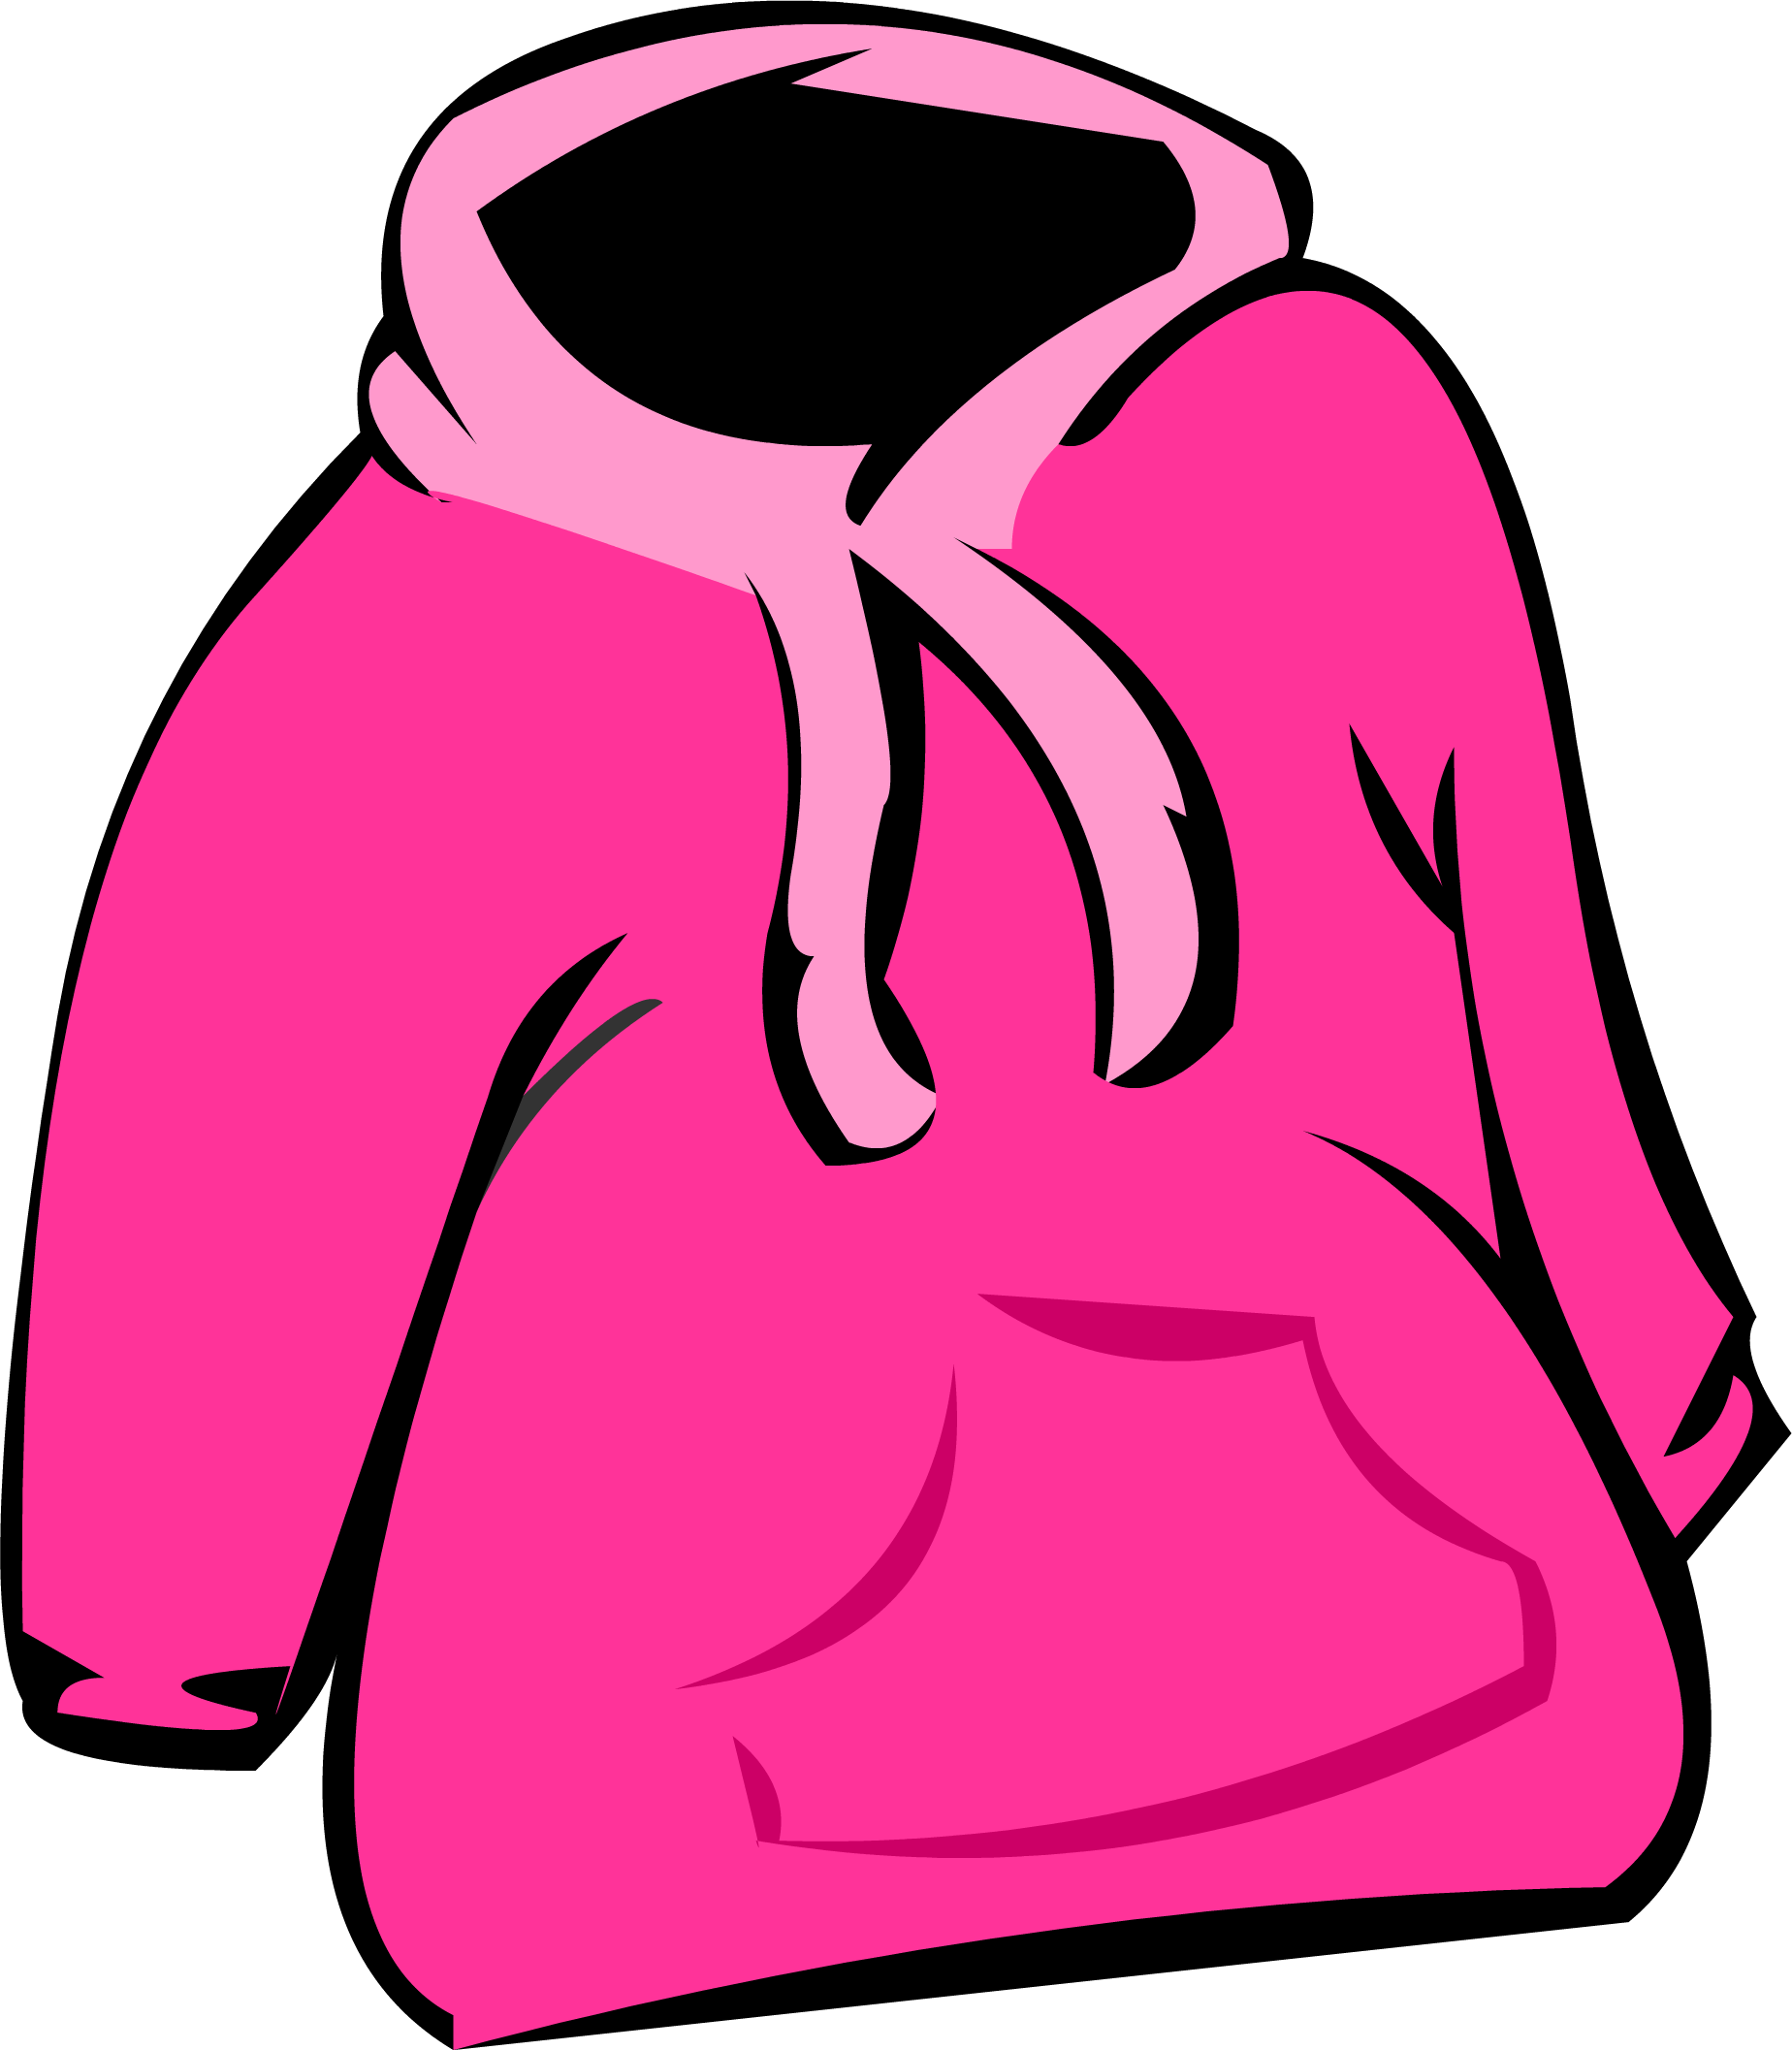 Download Image - Old Pink Hoodie.png | Club Penguin Wiki | FANDOM ...